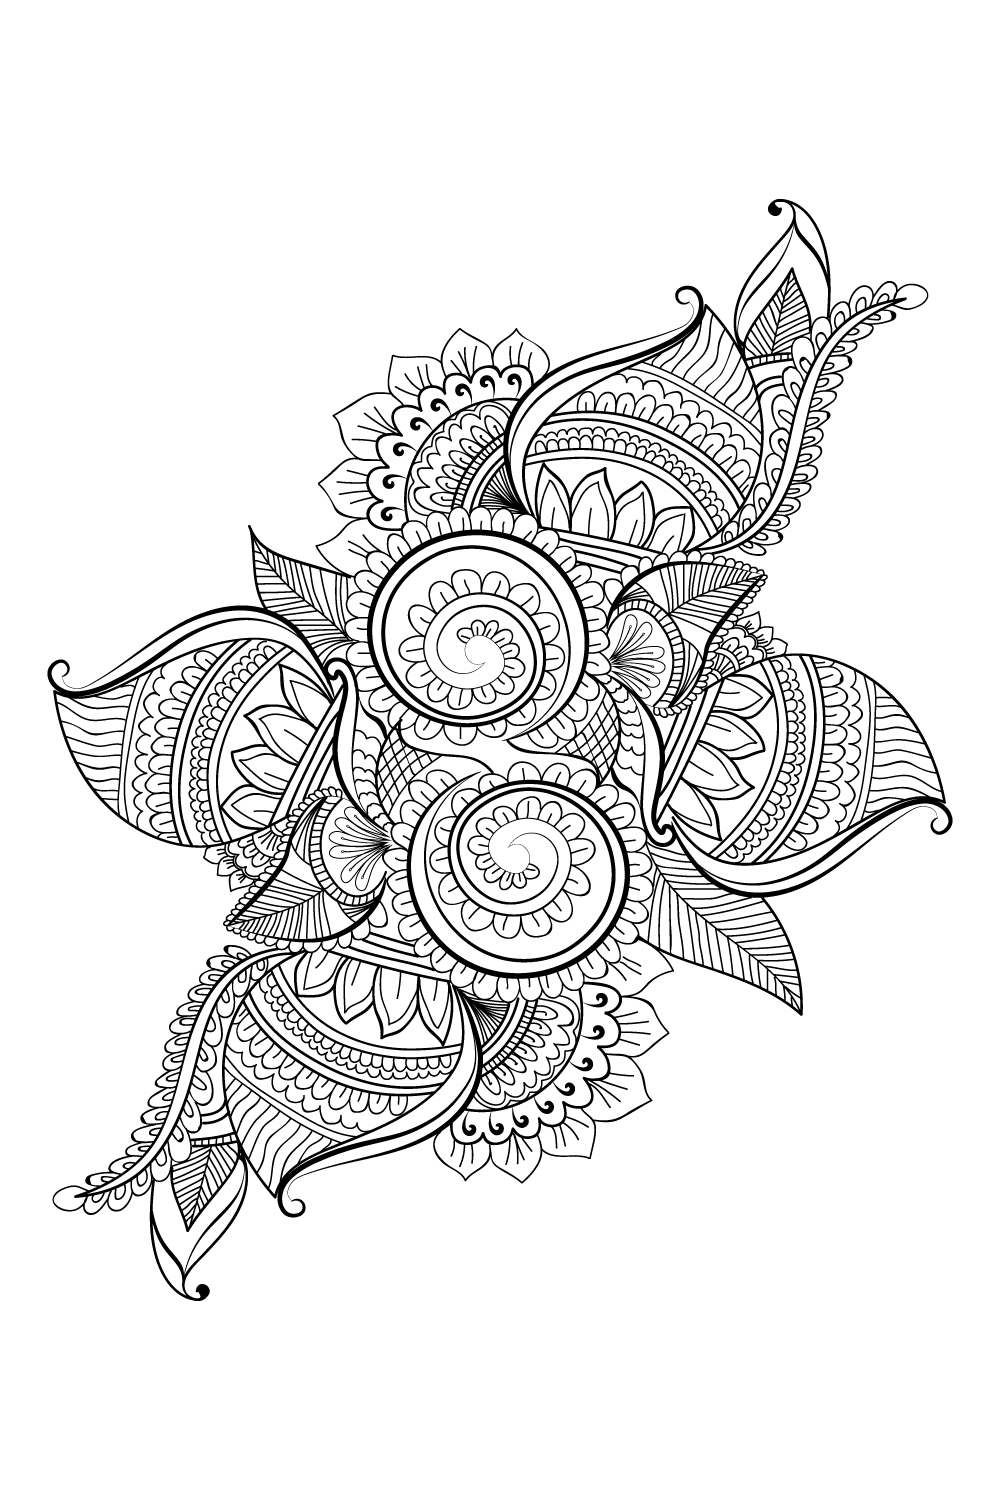 vintage floral vector illustration, doodle flower line art, ornamental floral zen tattoo drawing, tattoo designs, black and white illustration, pinterest preview image.